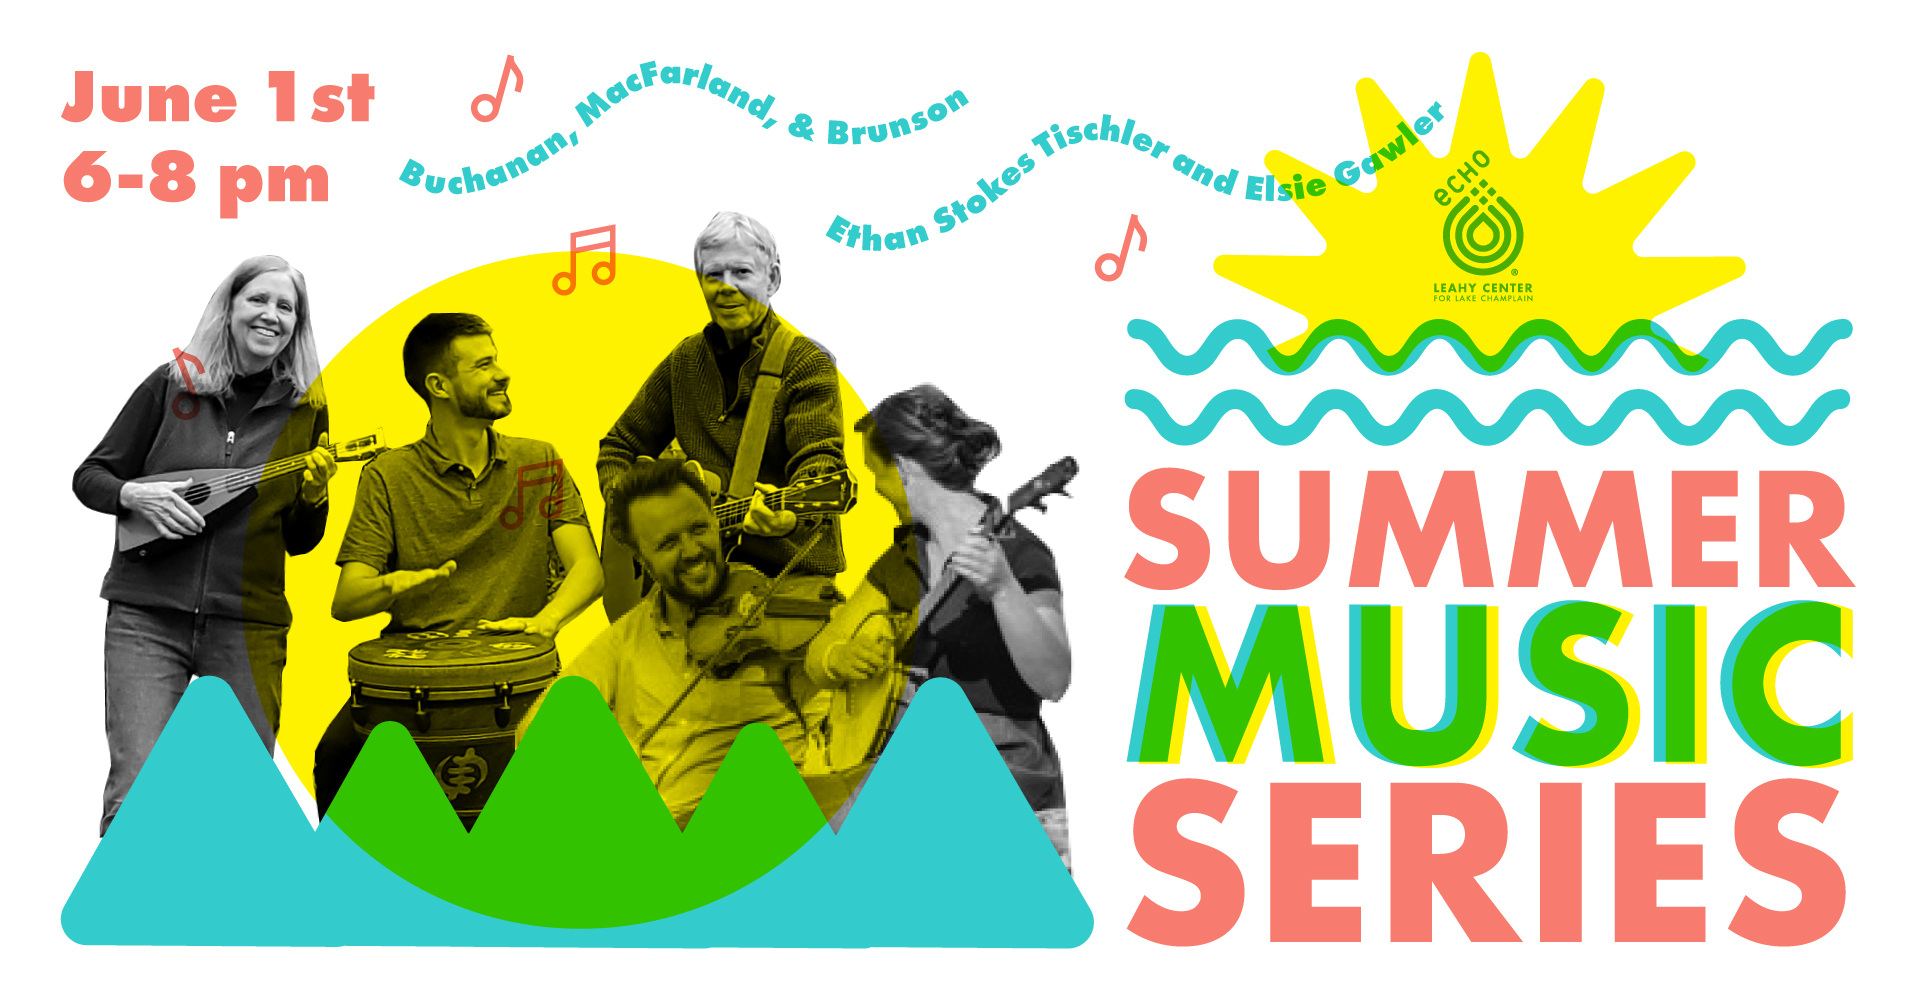 Summer Music Series: June 1st, 6-8 pm